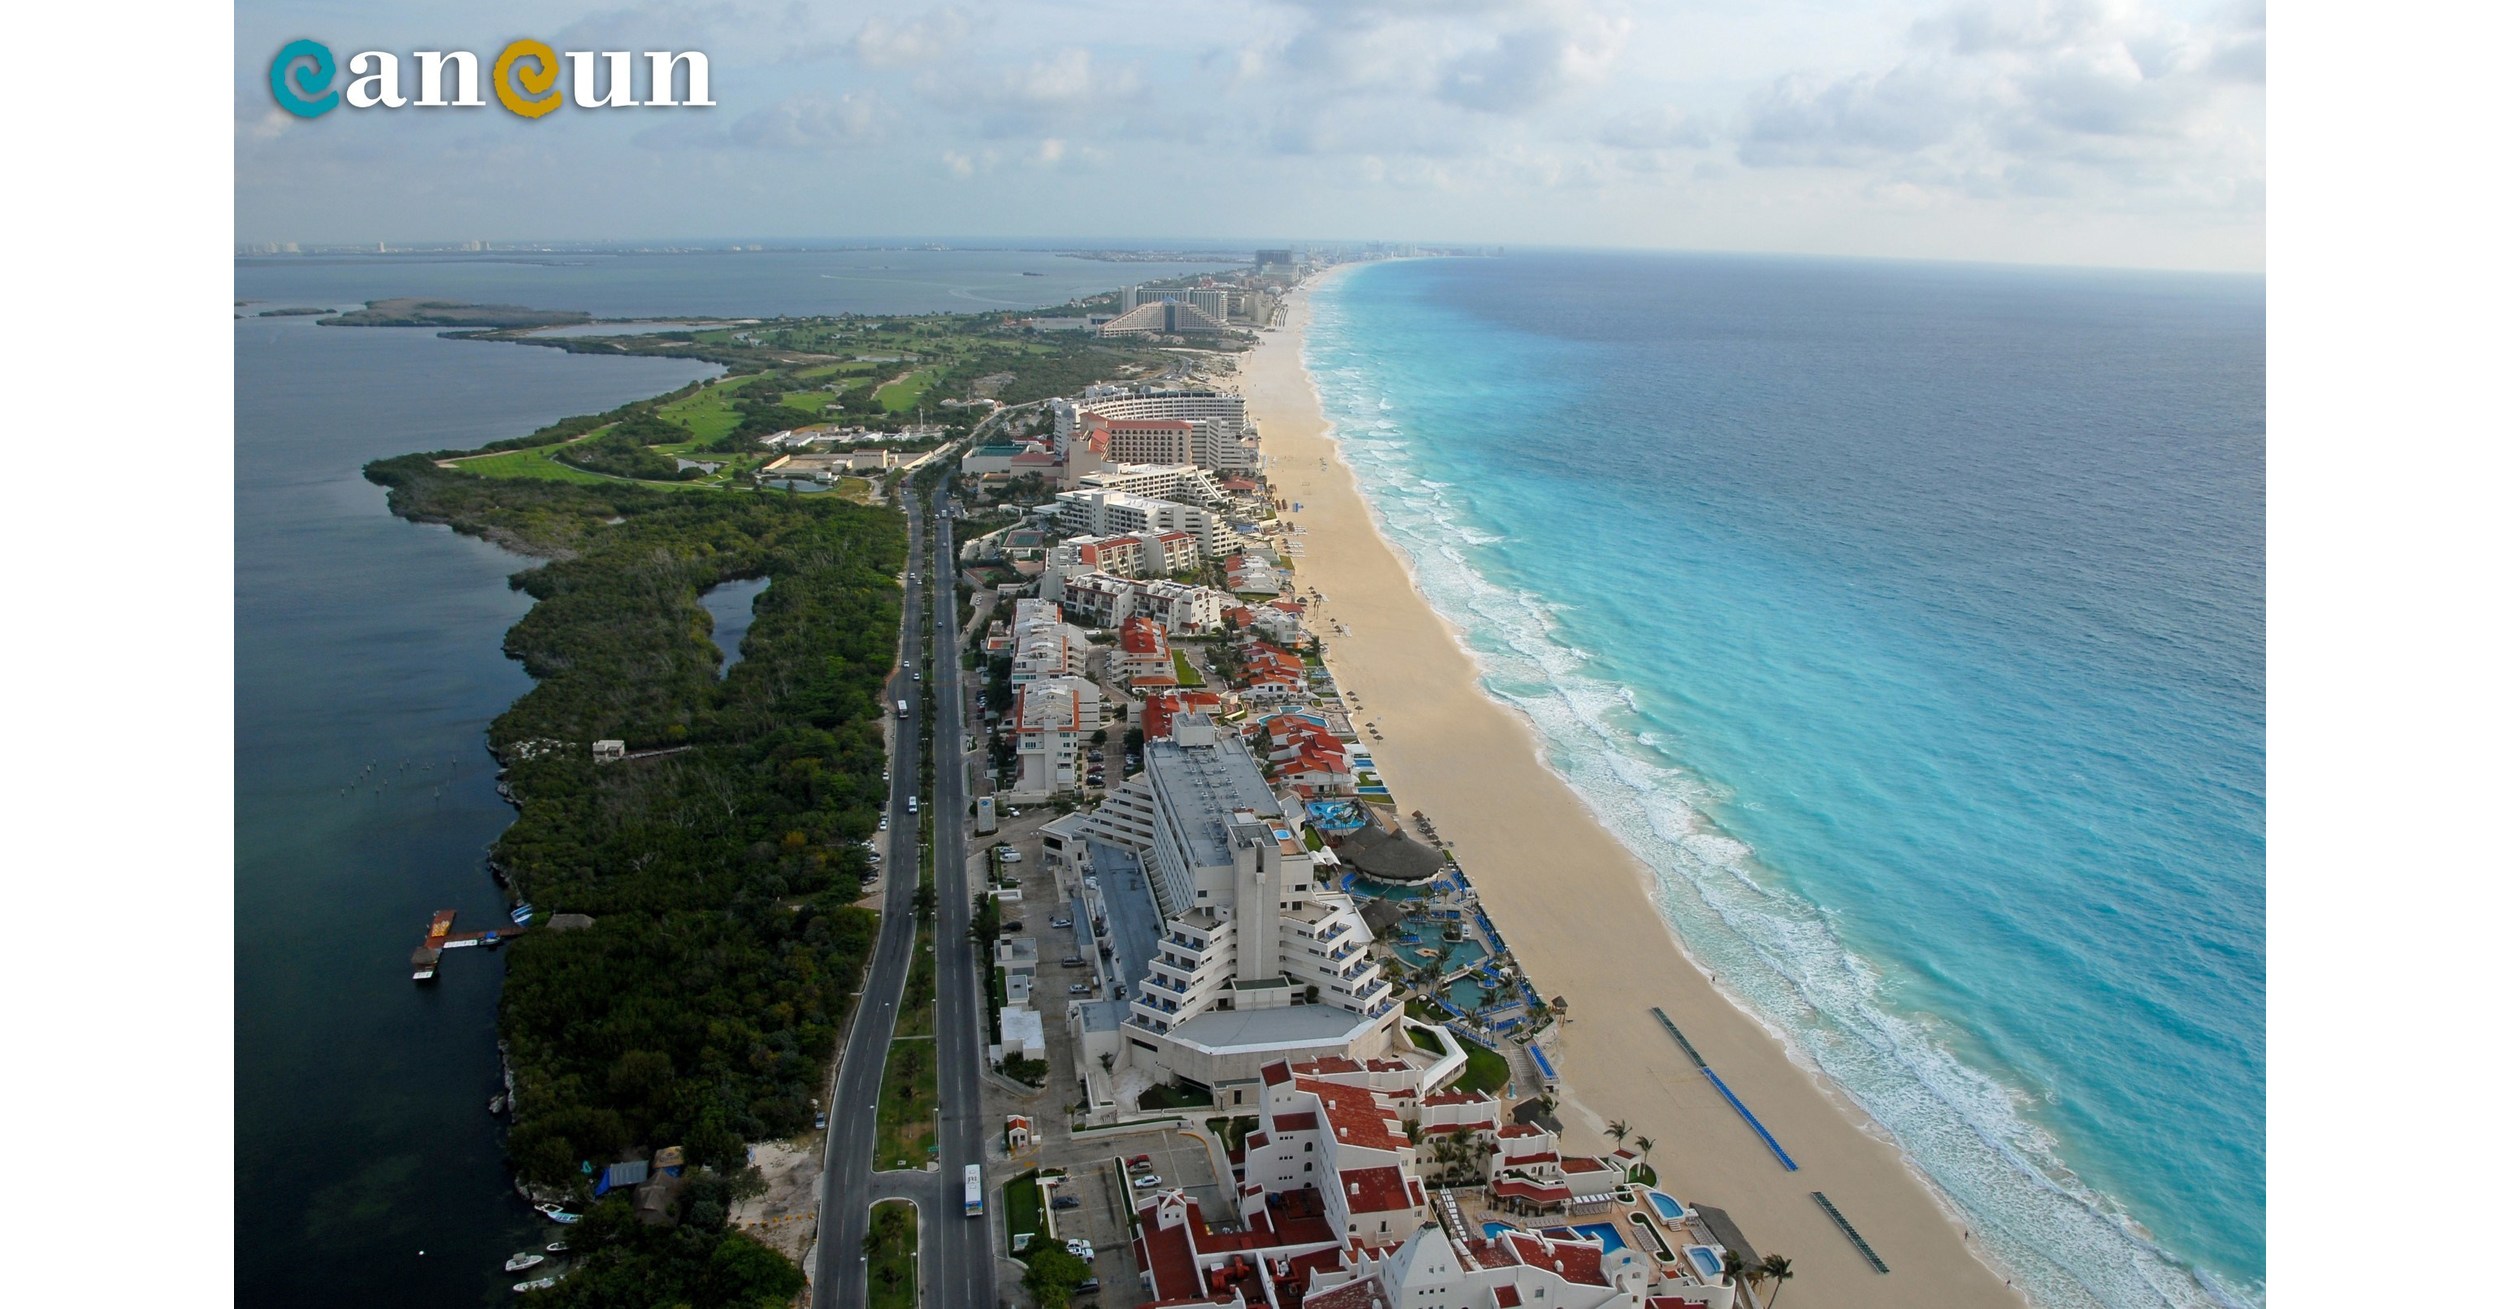 cancun quintana roo travel advisory